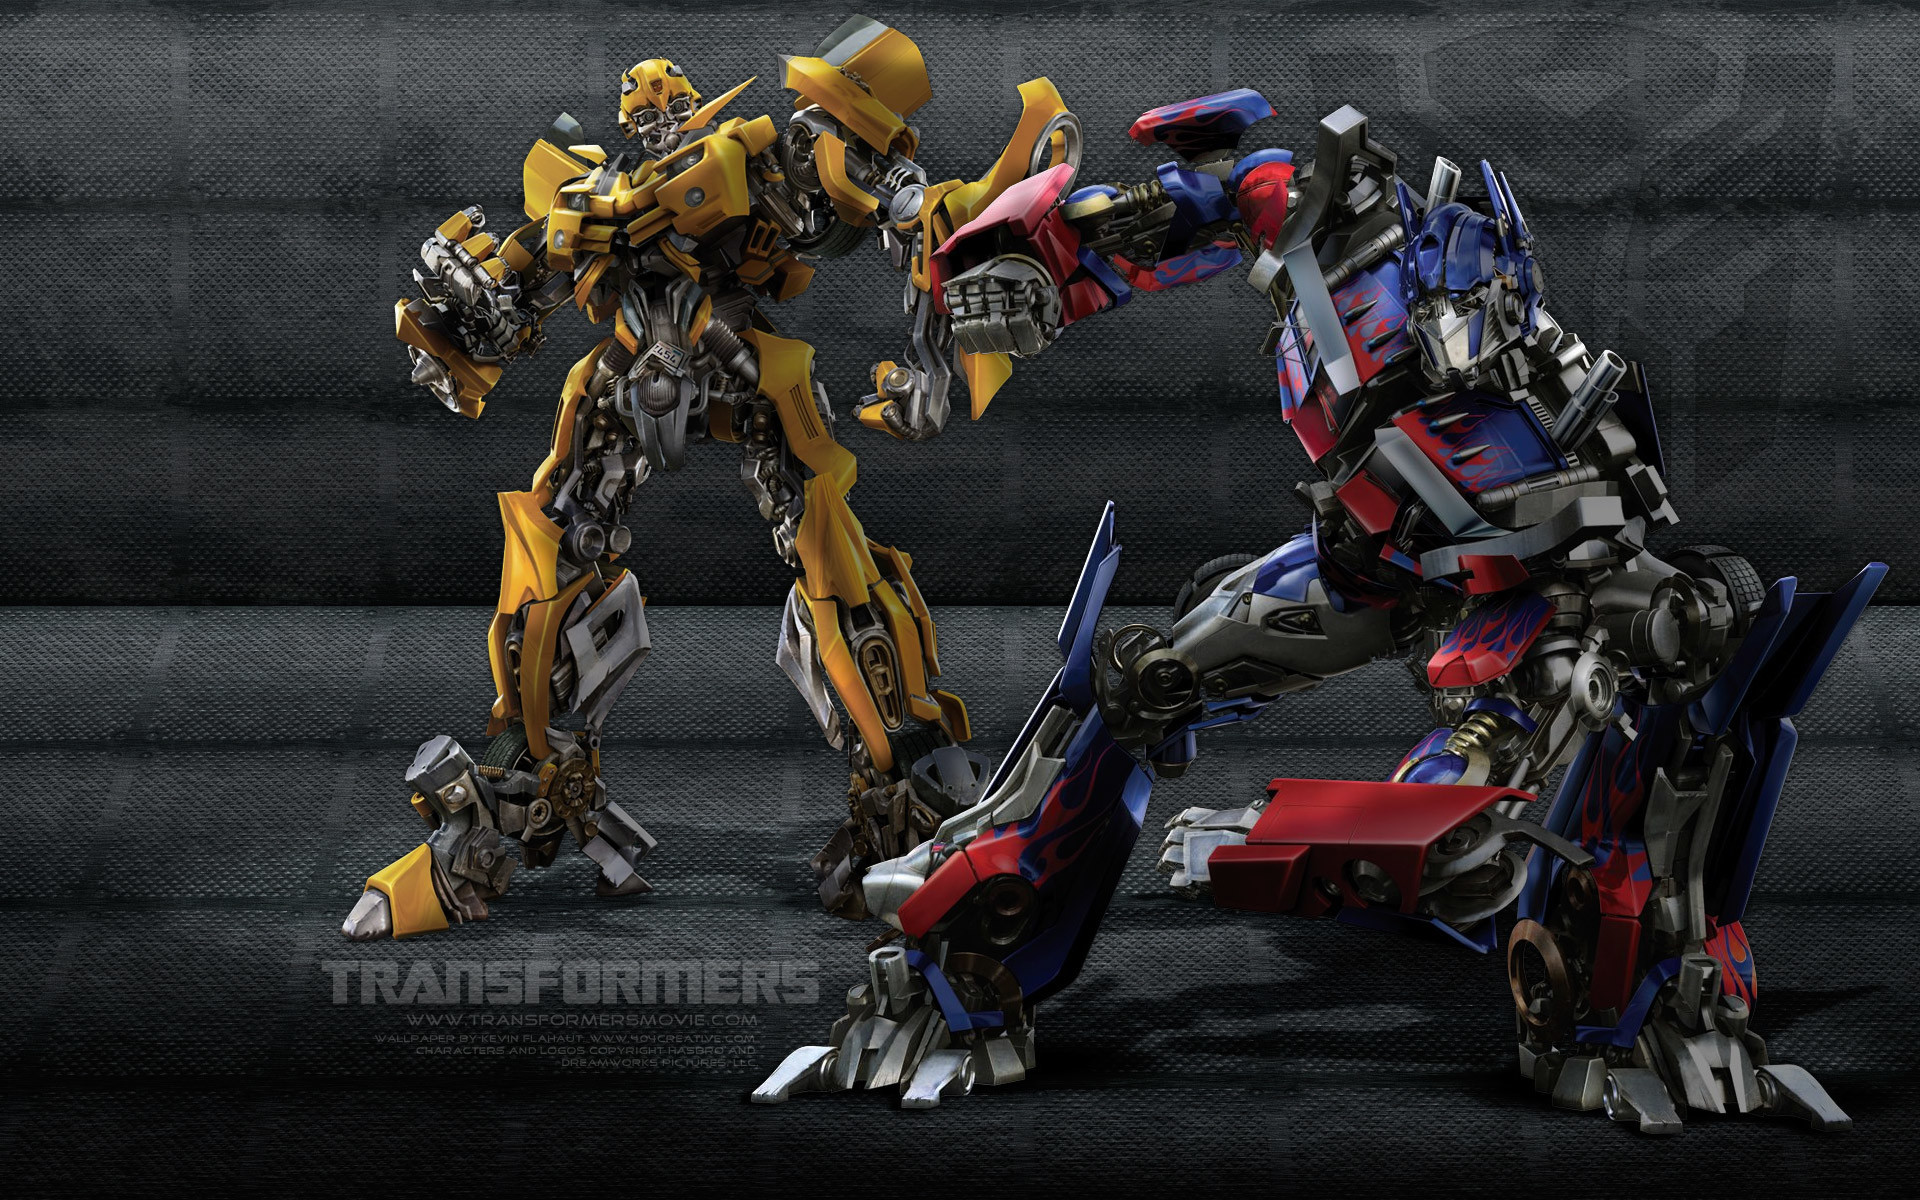 Transformers hd wallpaper. More Transformers Wallpapers. We